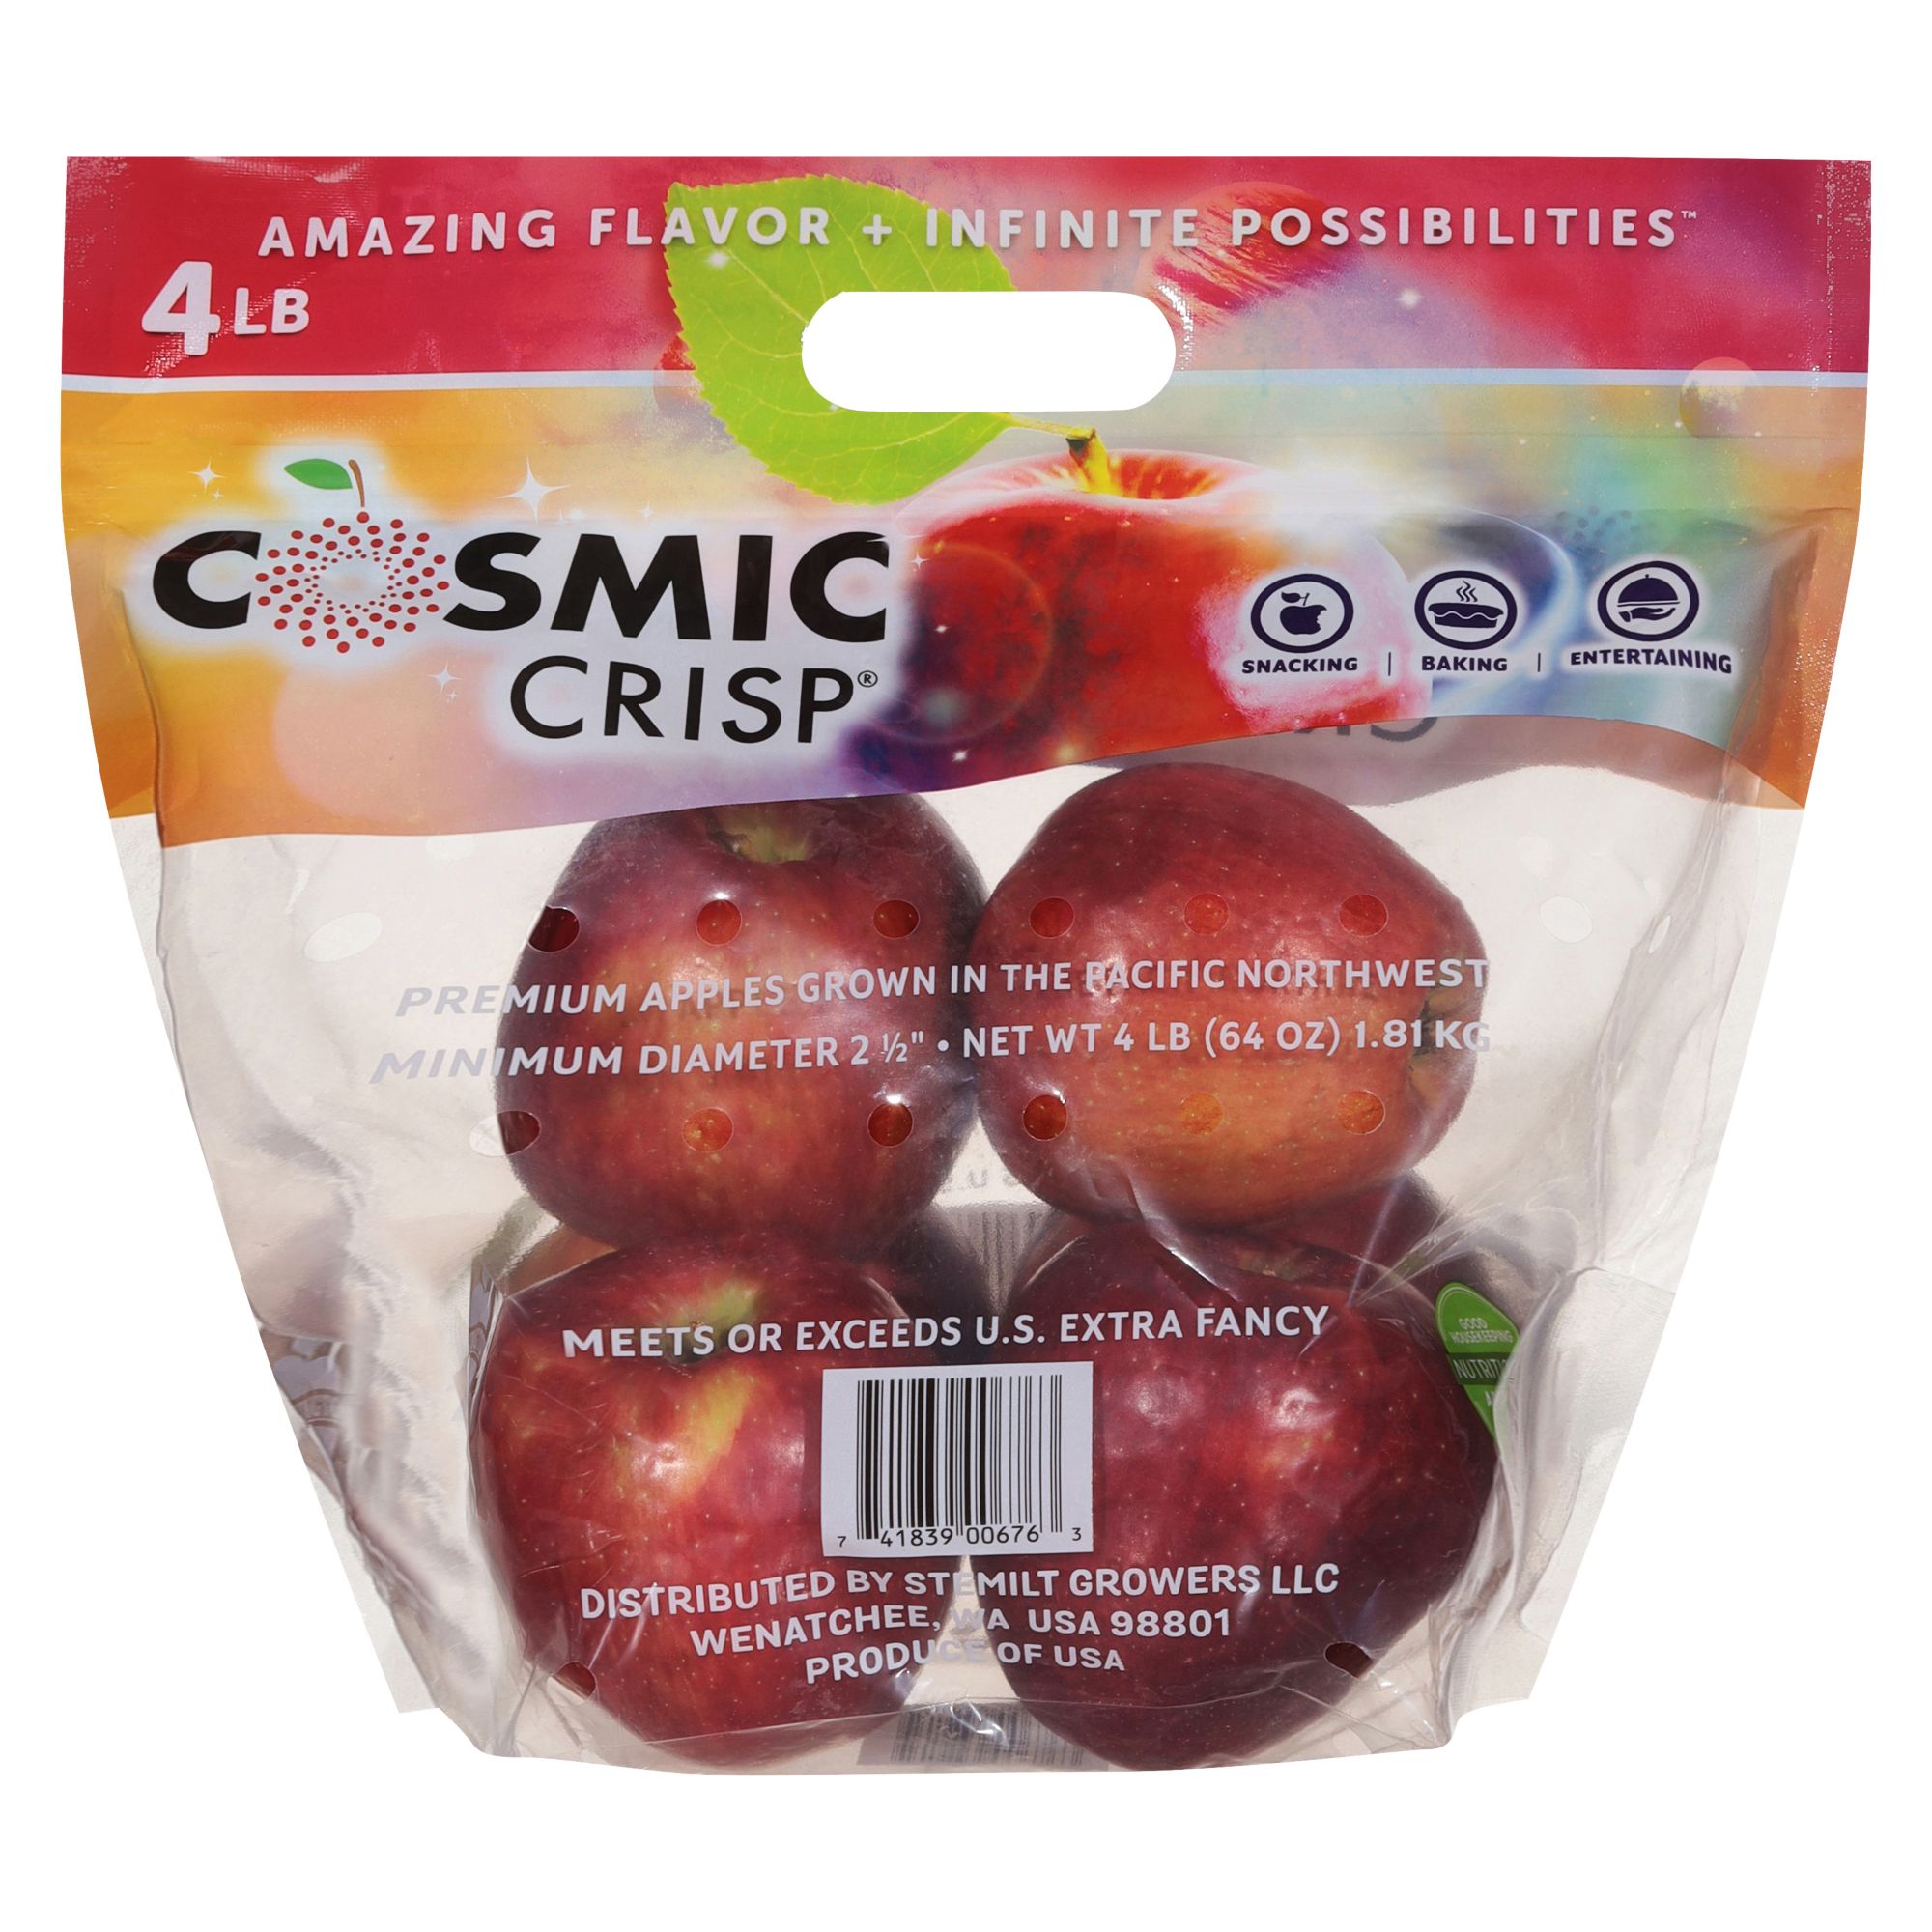 Cosmic Crisp Apple Review - Apple Rankings by The Appleist Brian